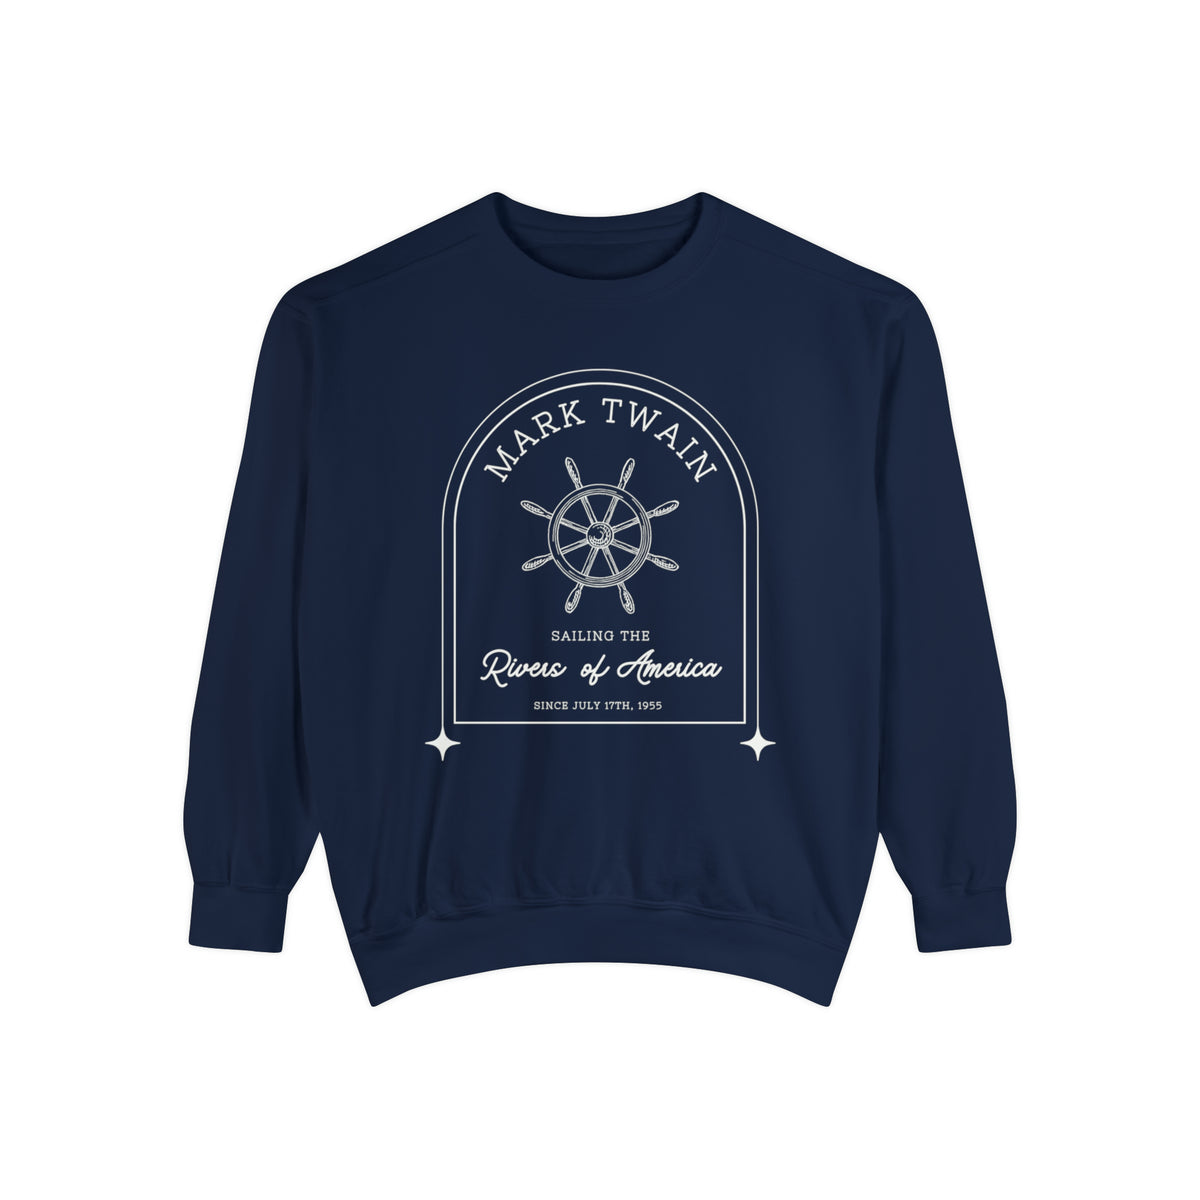 Rivers of America Comfort Colors Unisex Garment-Dyed Sweatshirt